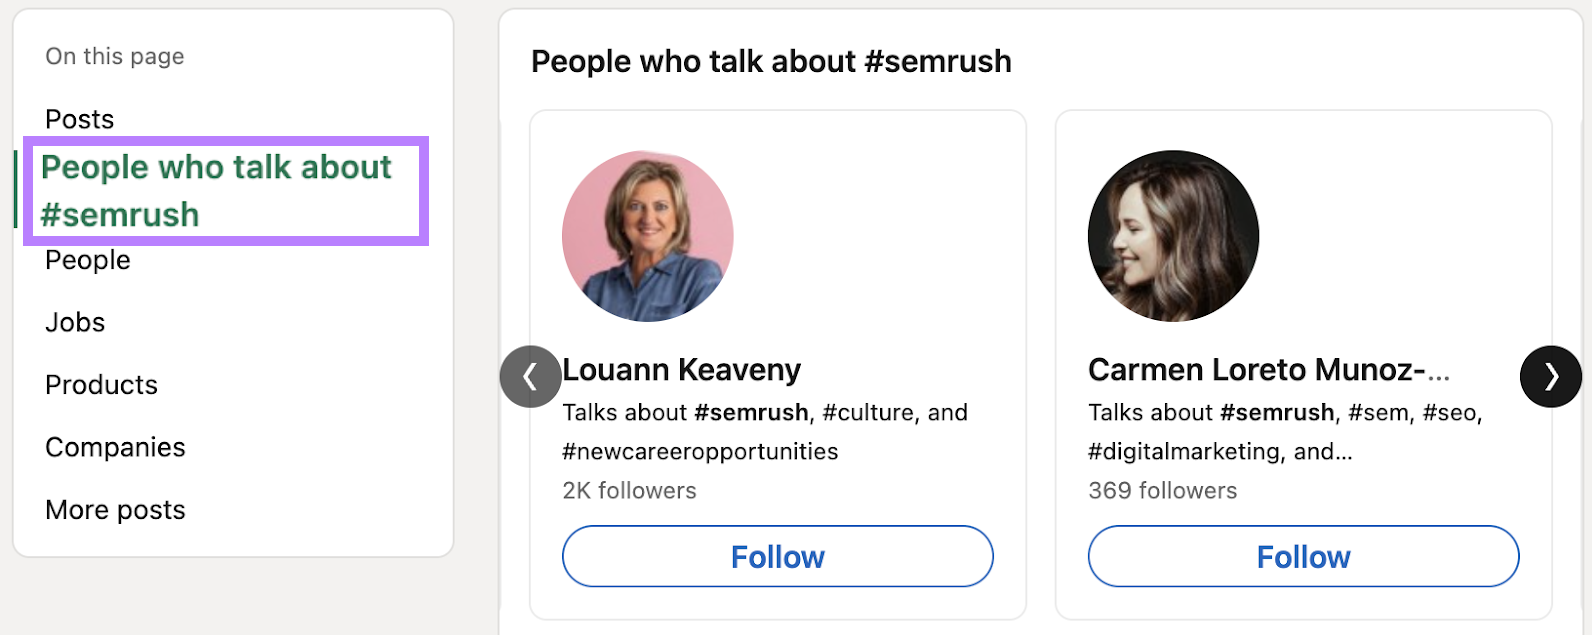 “People who talk about #semrush” on LinkedIn